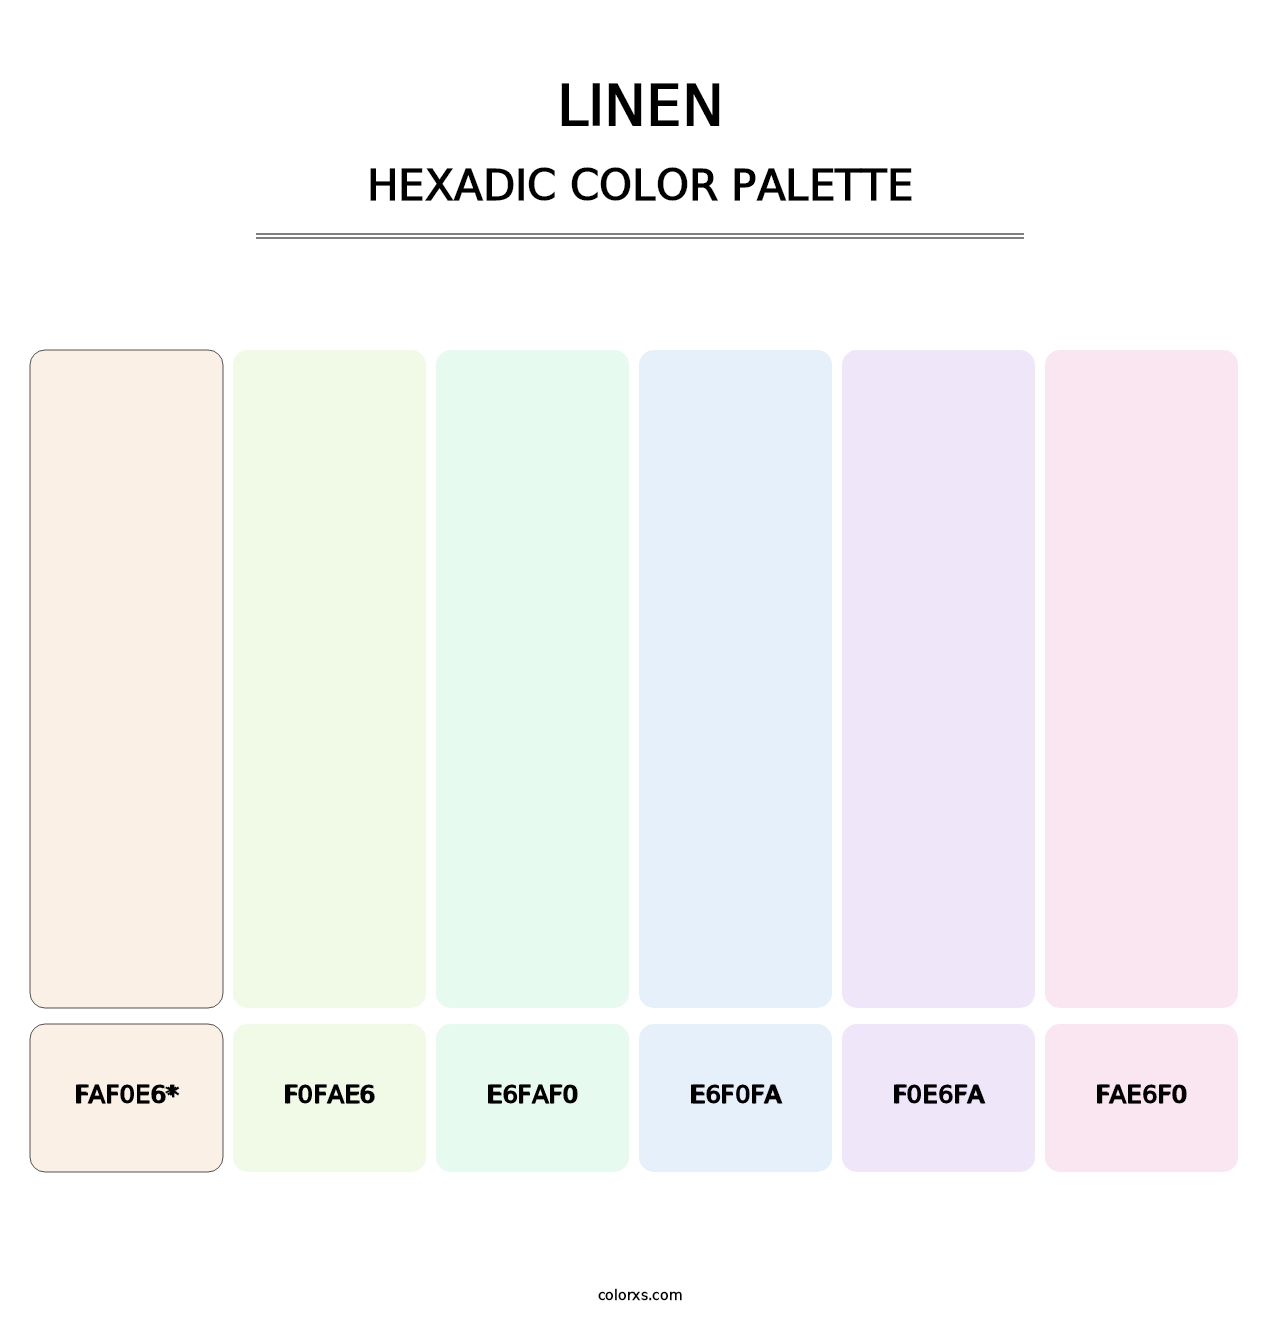 Linen - Hexadic Color Palette